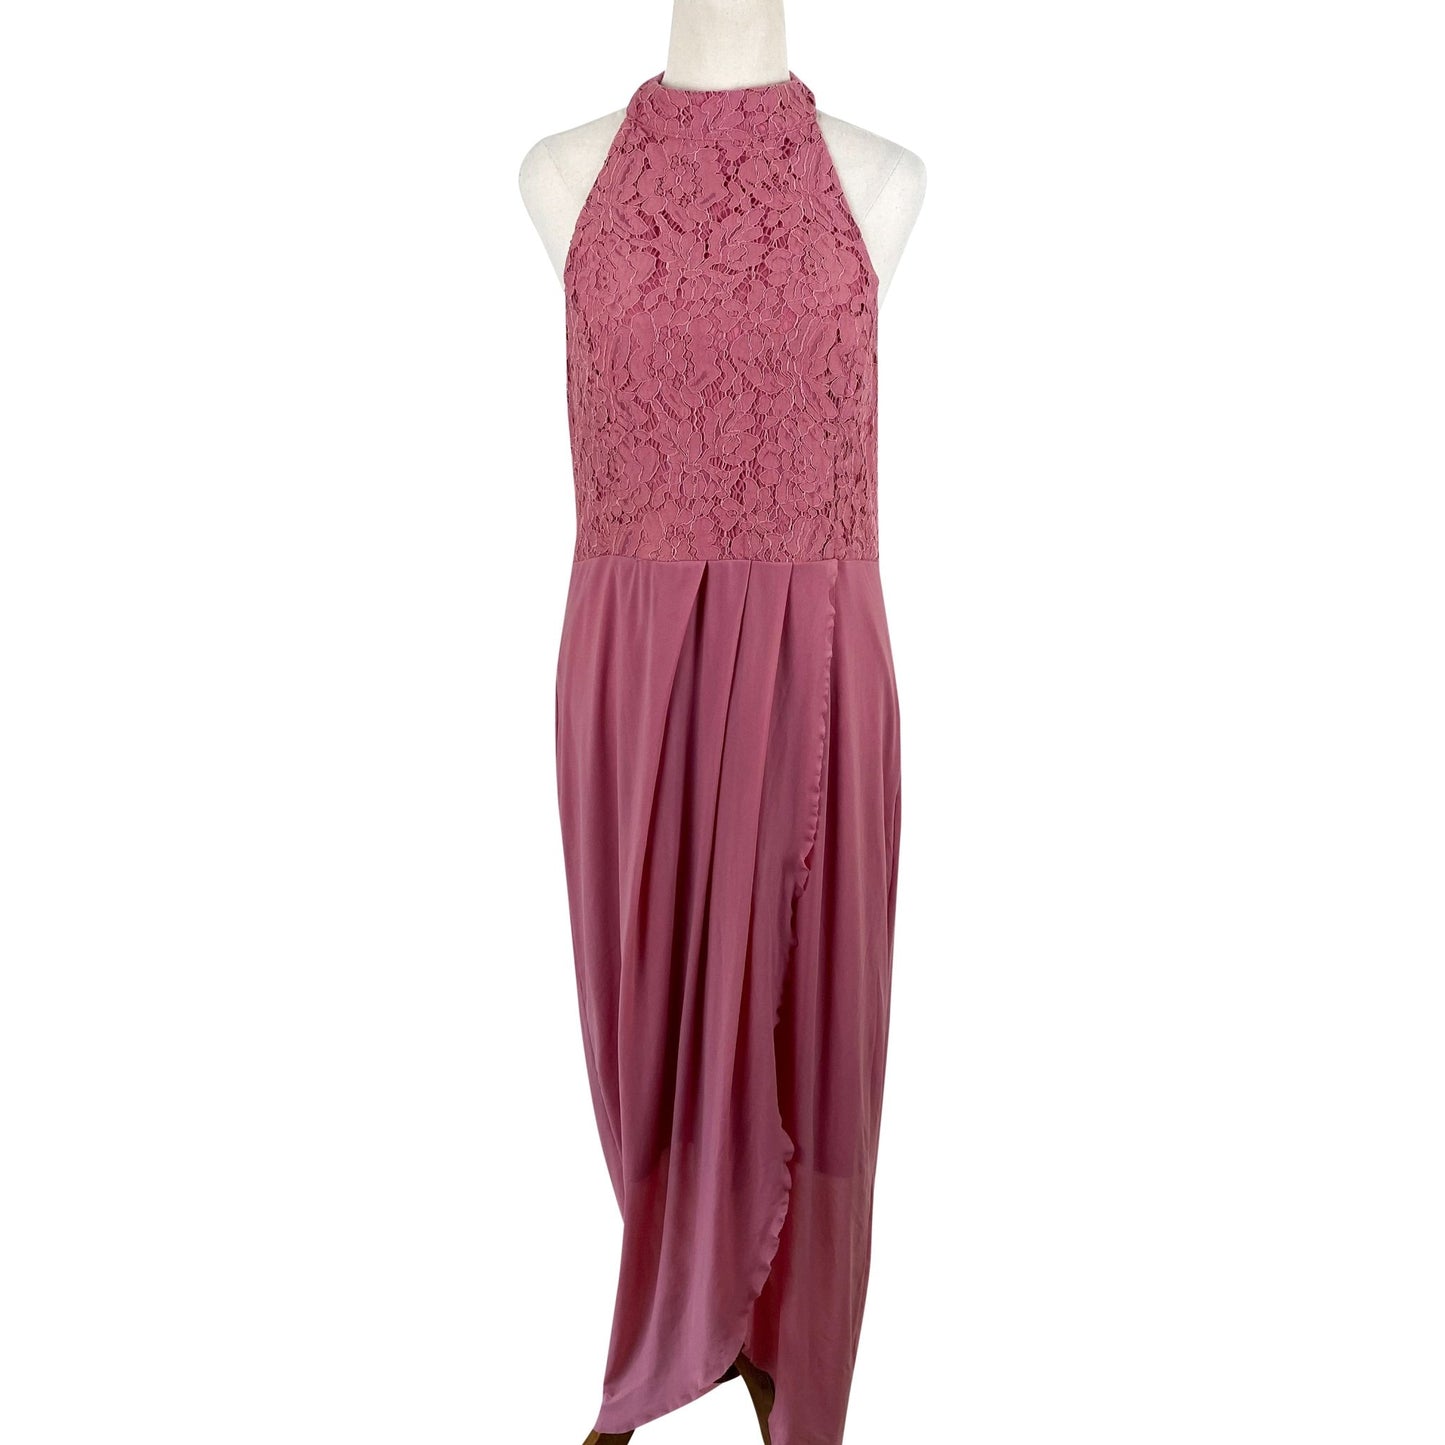 Pagani pink halter dress | size 14